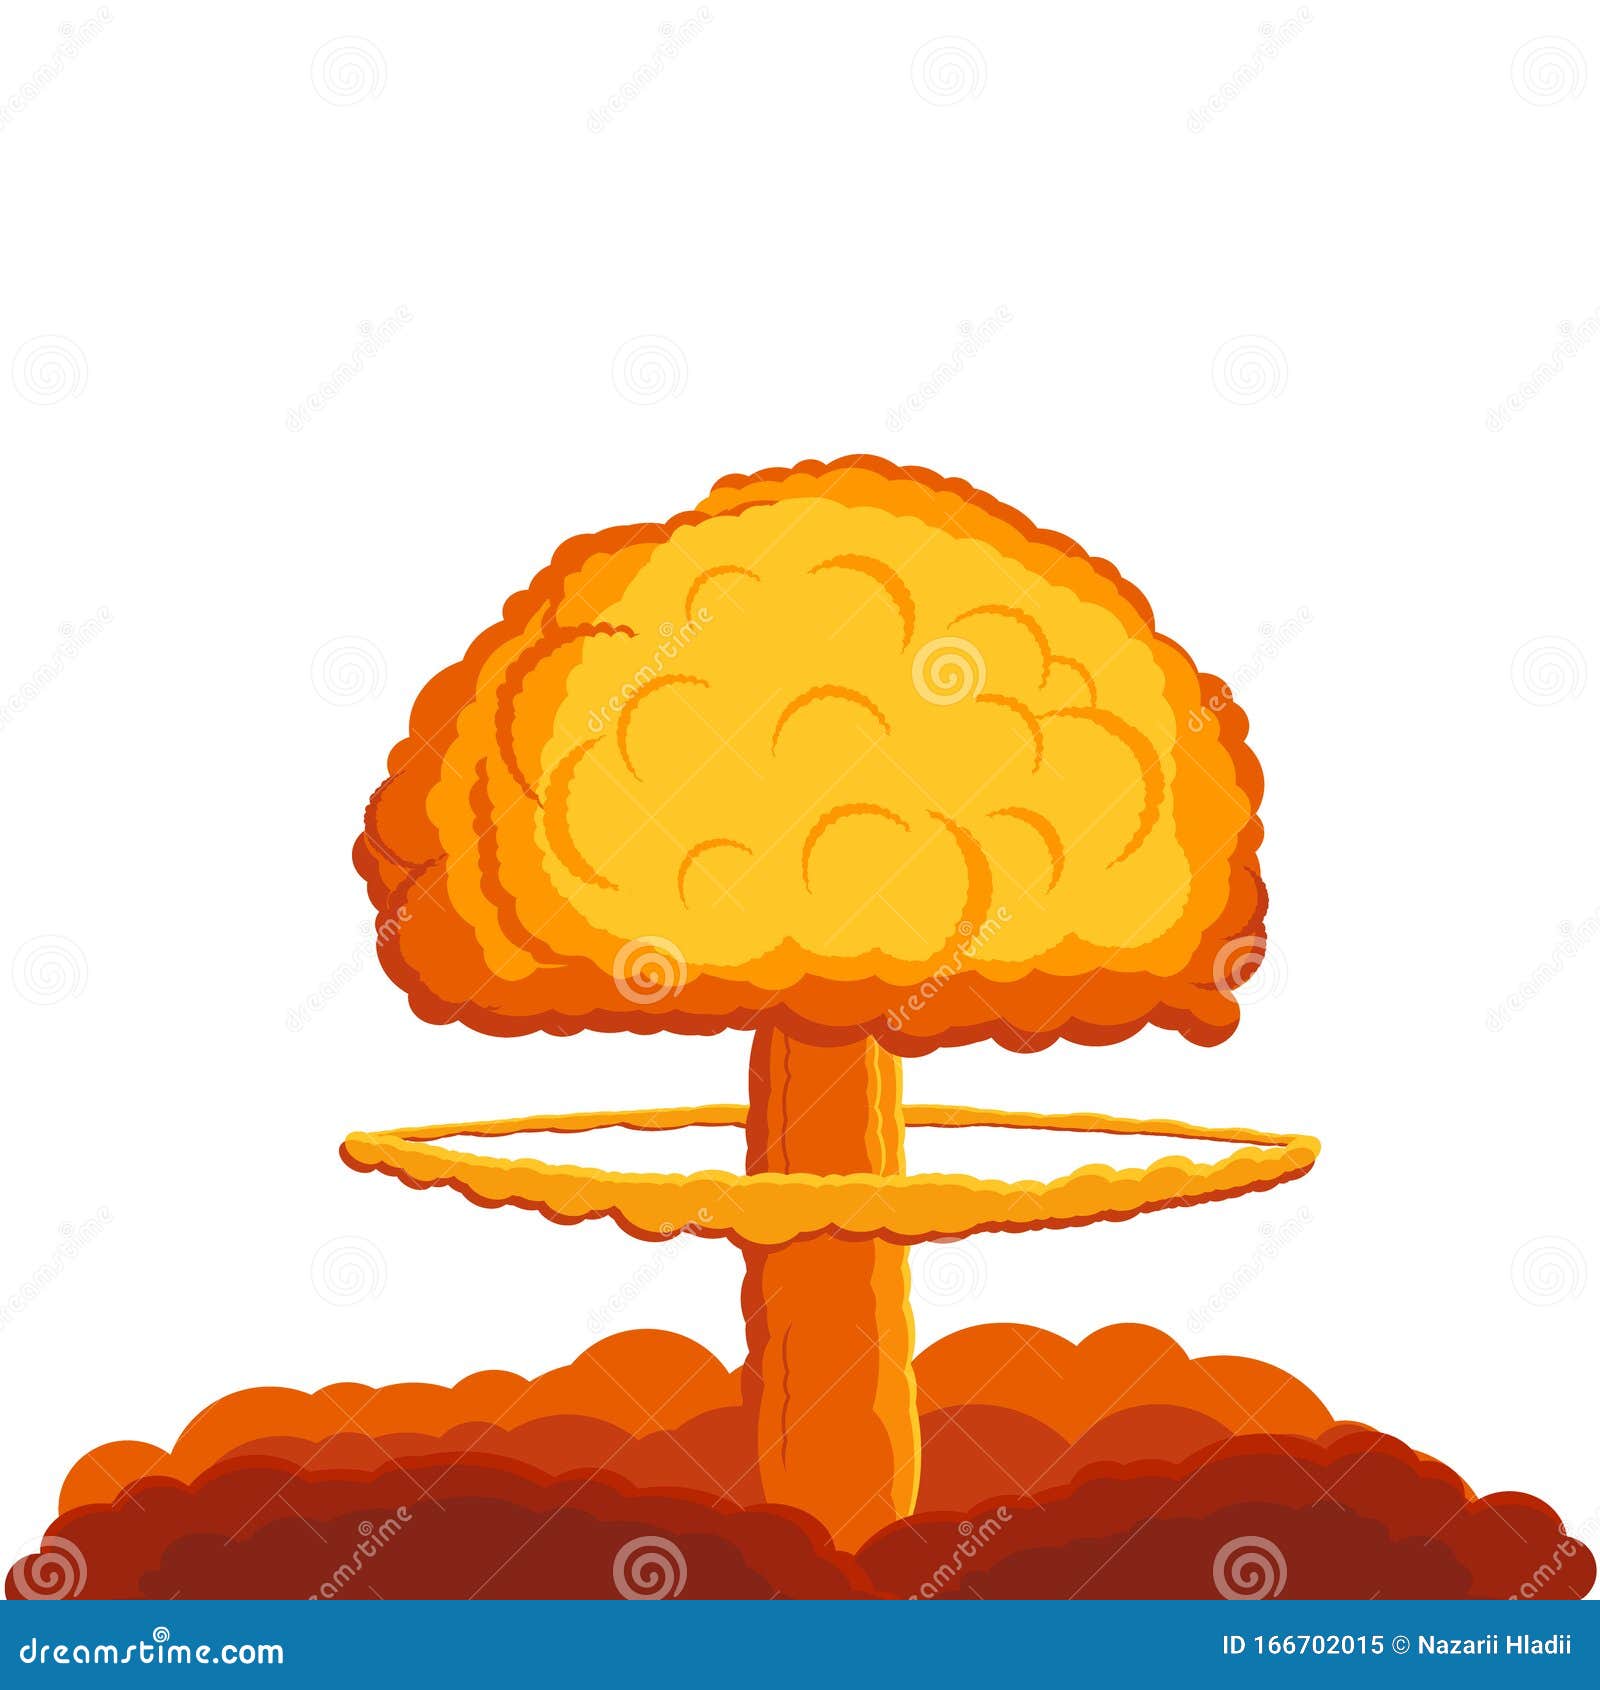 vector-illstration-nuke-bomb-isolated-explosion-166702015.jpg